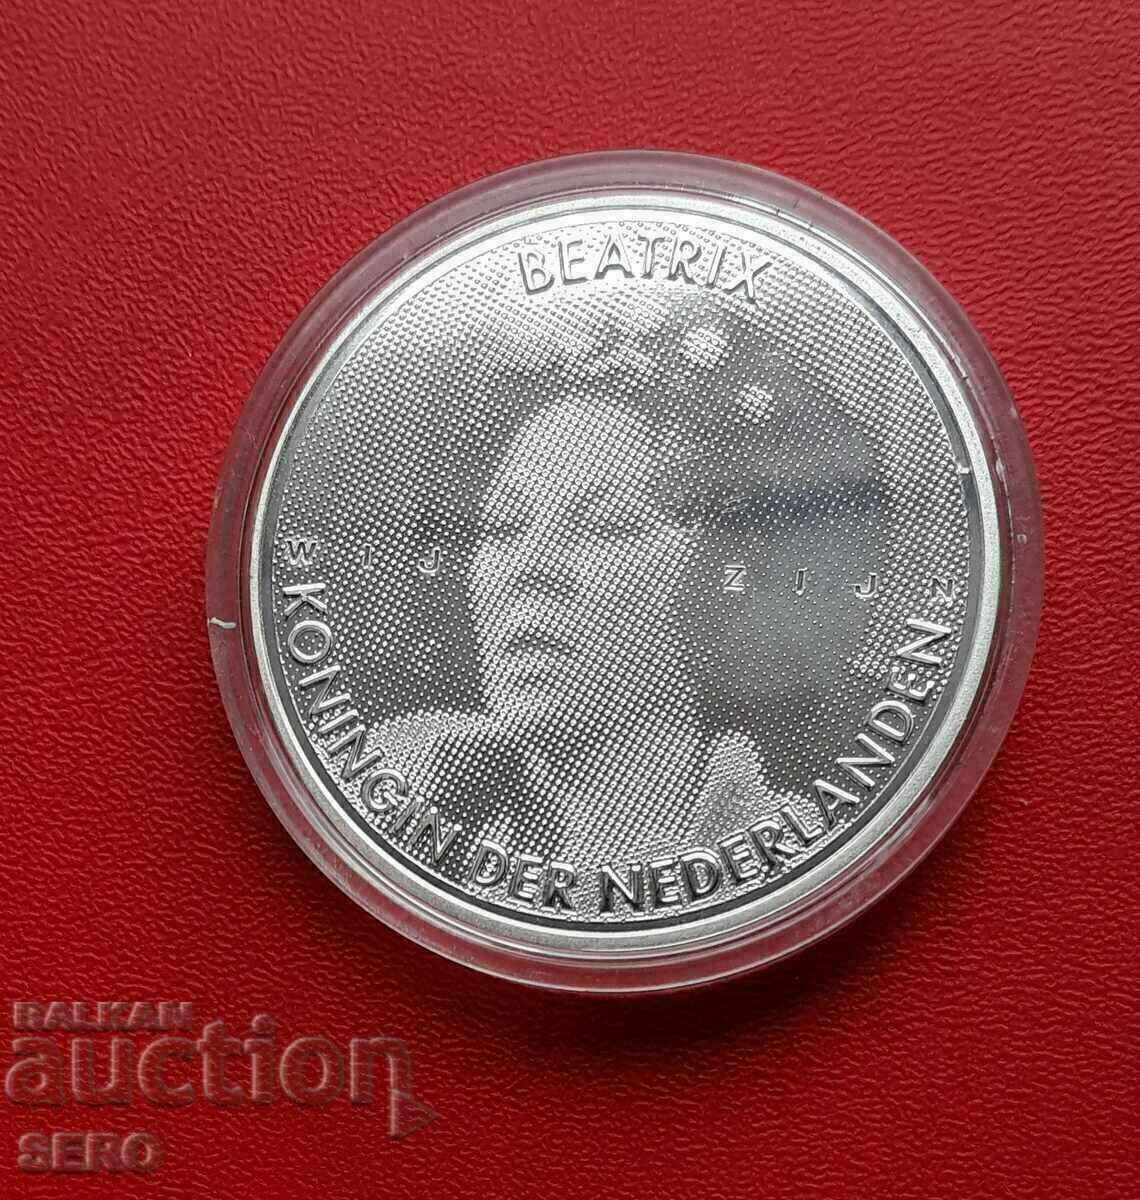 Нидерландия-10 евро 2005-25 г.управление на кралицата-сребро